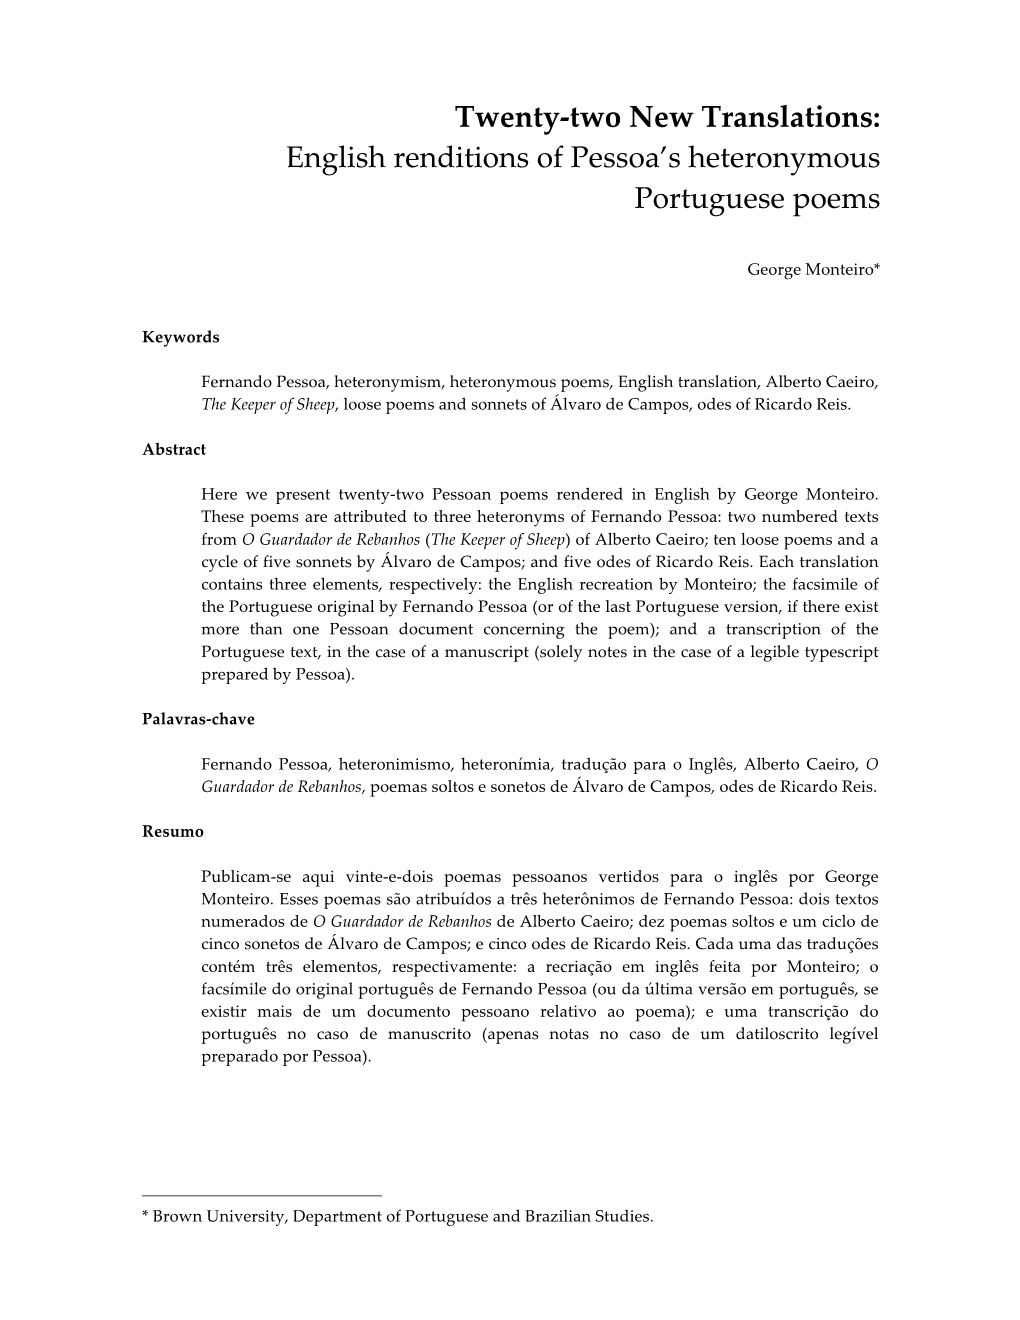 English Renditions of Pessoa's Heteronymous Portuguese Poems